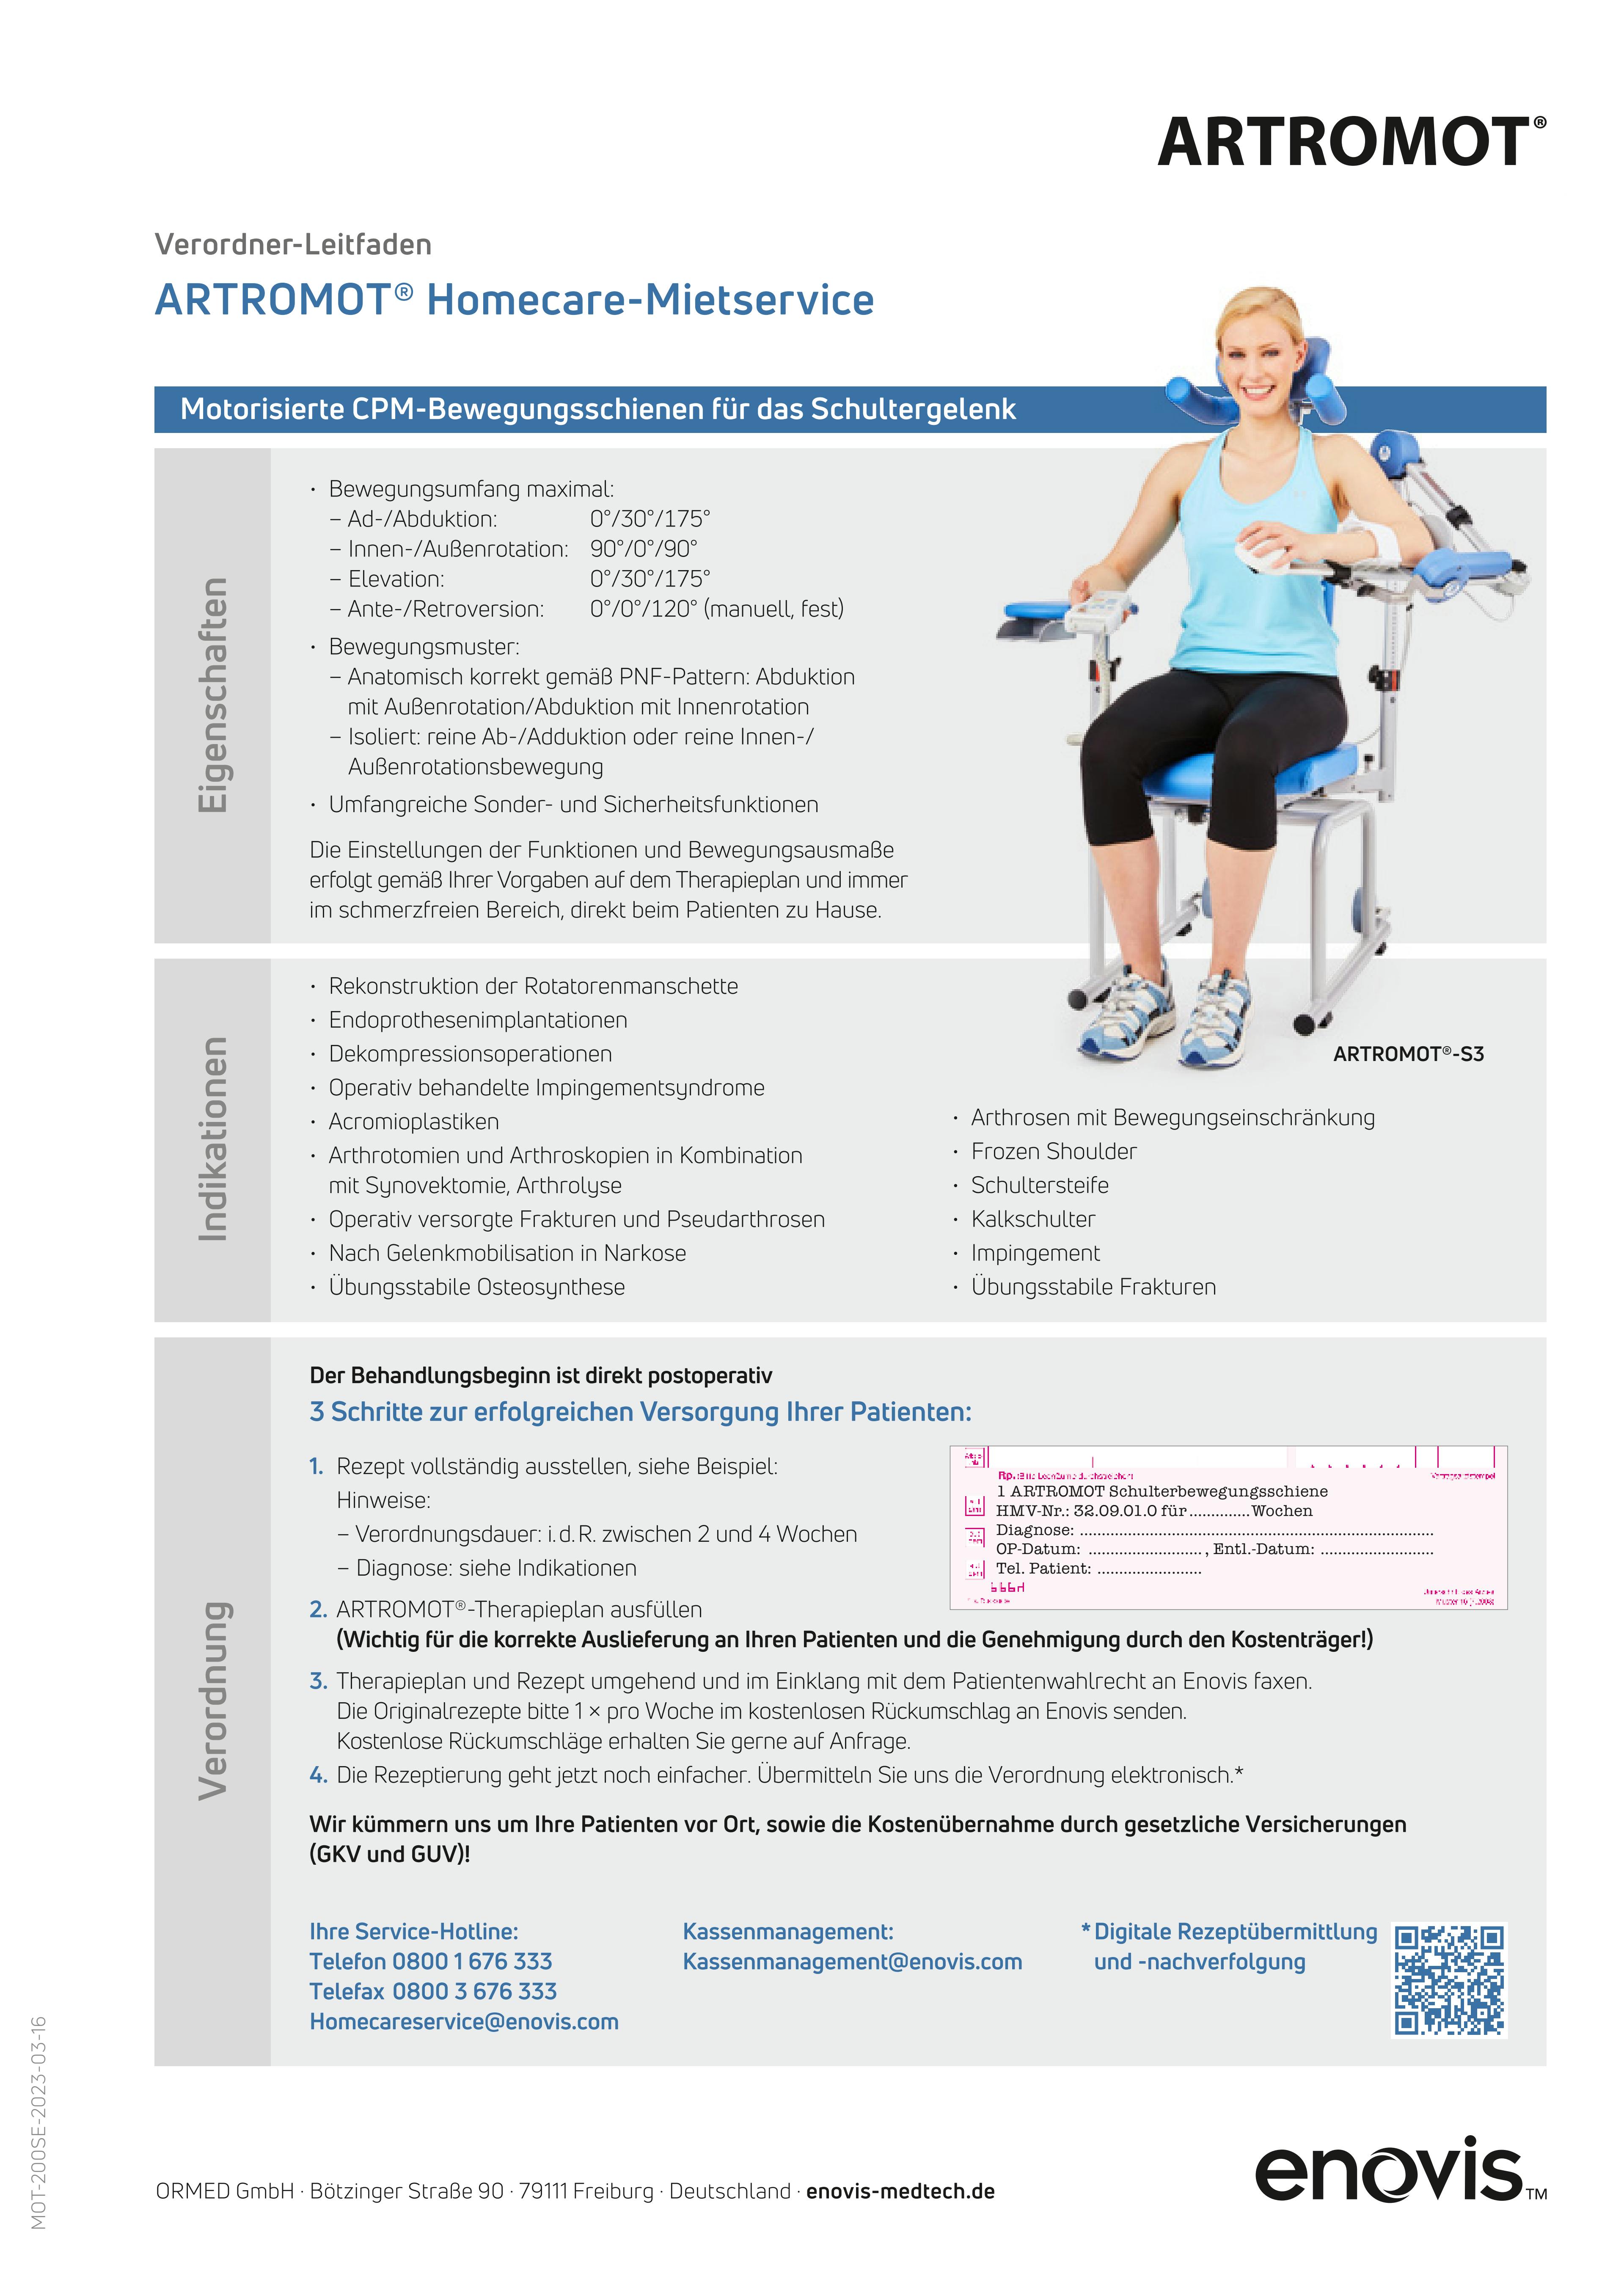 Verordnerleitfaden Artromot Schultergelenk_MOT-200SE_02-20.pdf